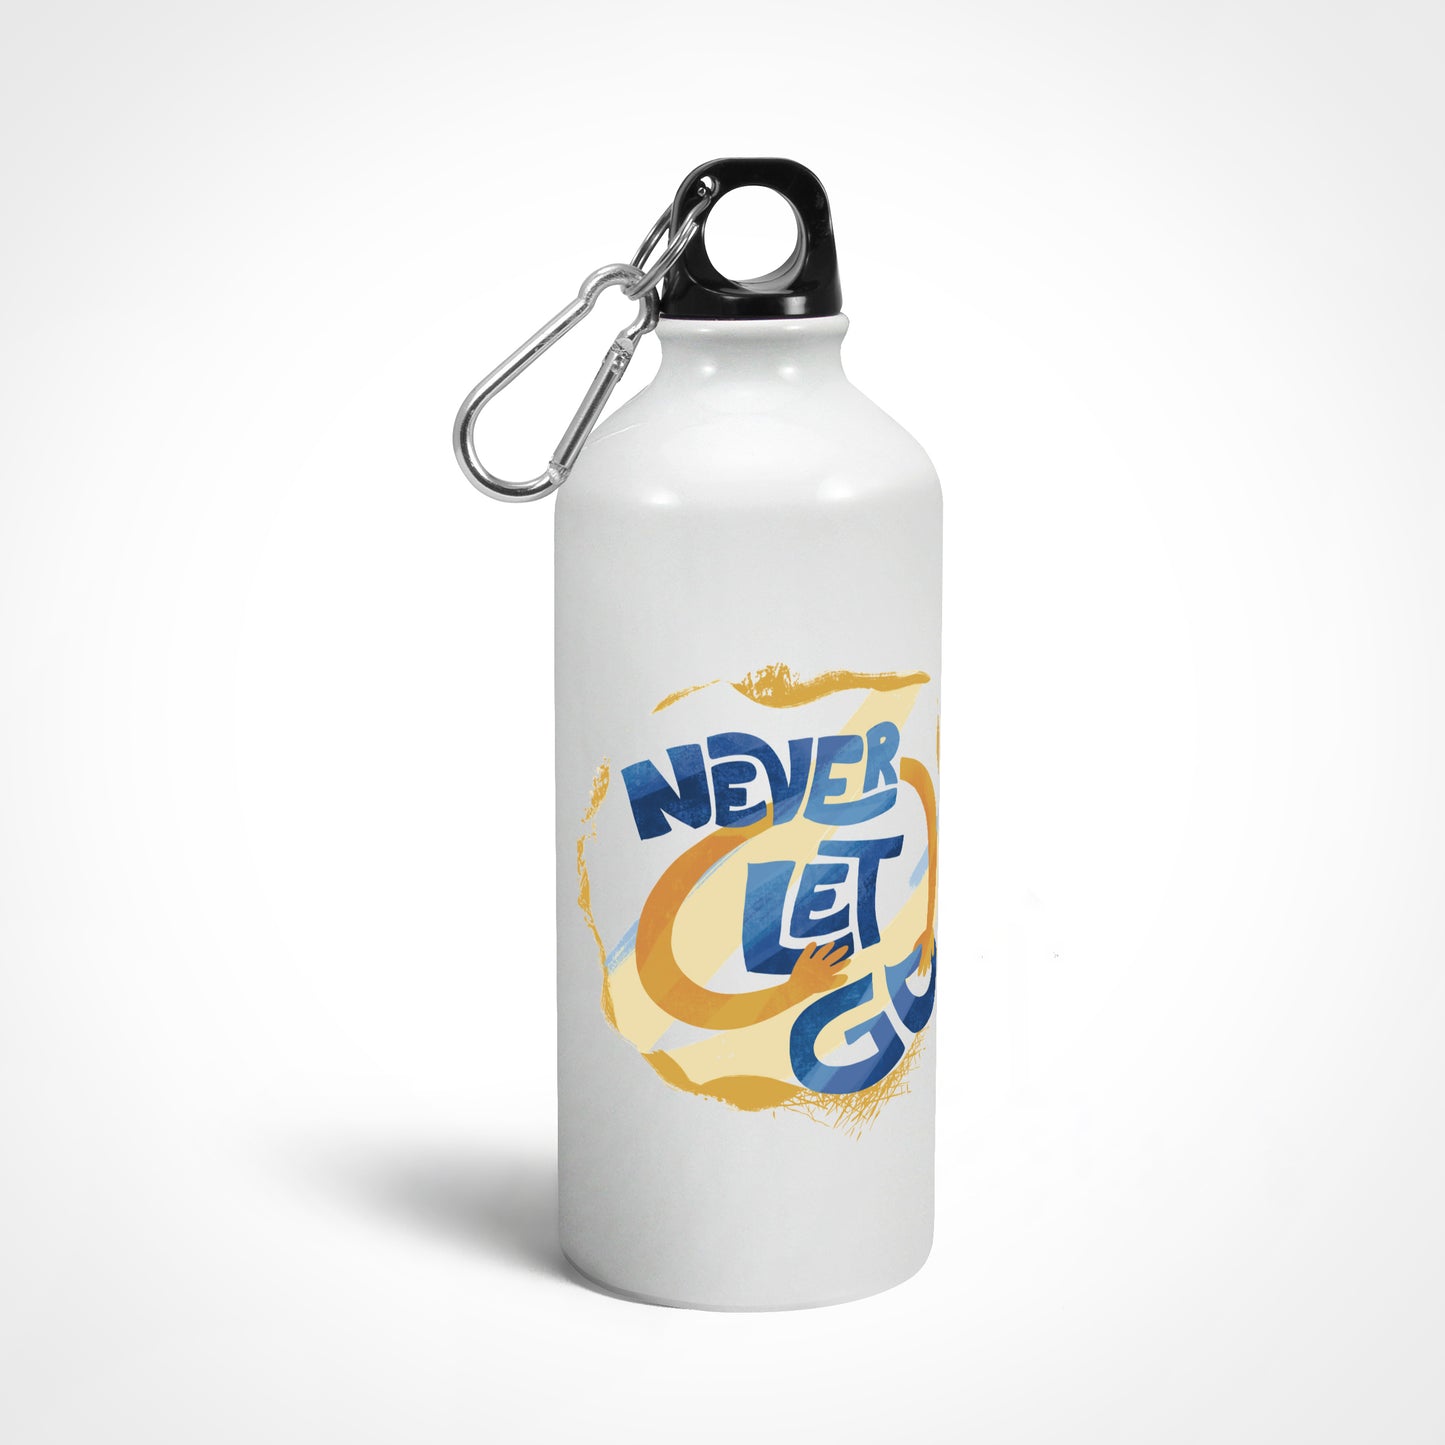 Never Let Go (JK FESTA Song) - Sipper Bottle